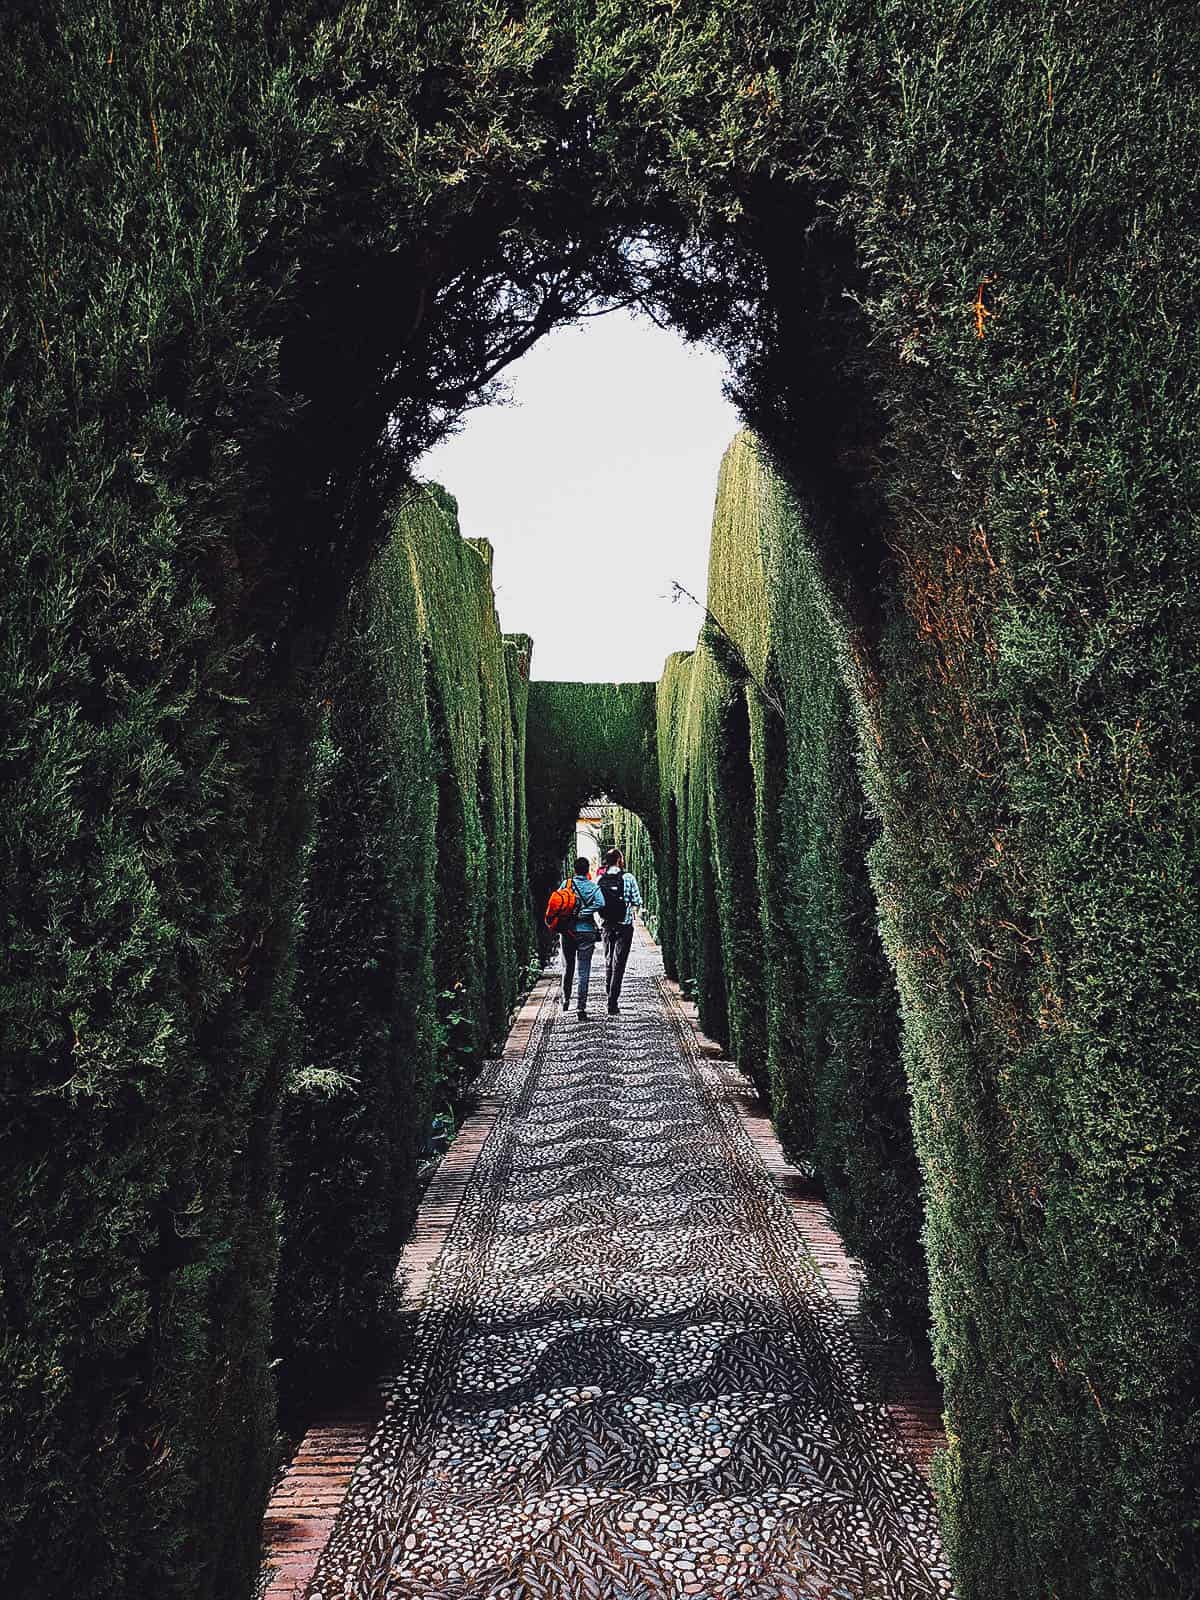 Walking through bushes shaped like arches in Granada, Spain